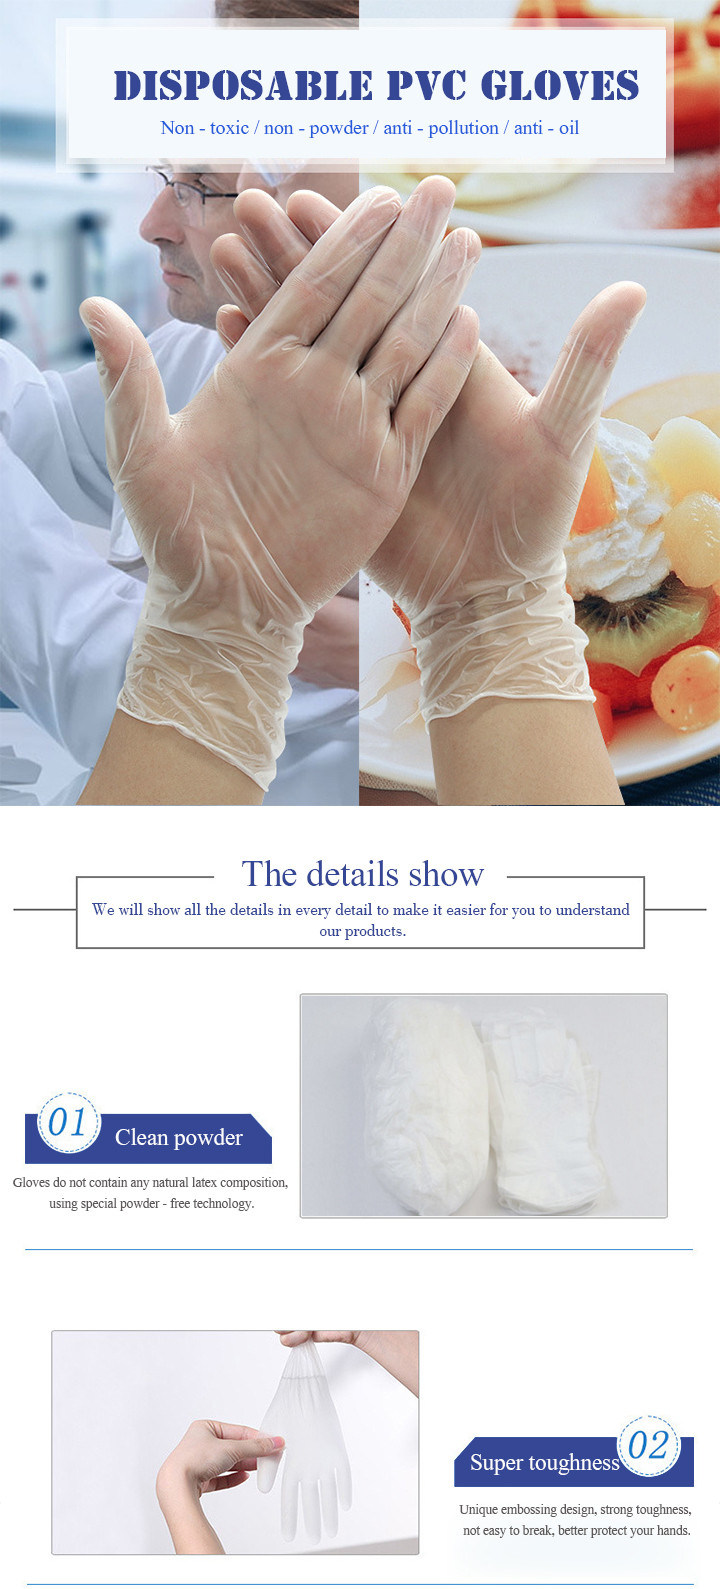 Disposable Vinyl/PVC Exam Surgical Gloves